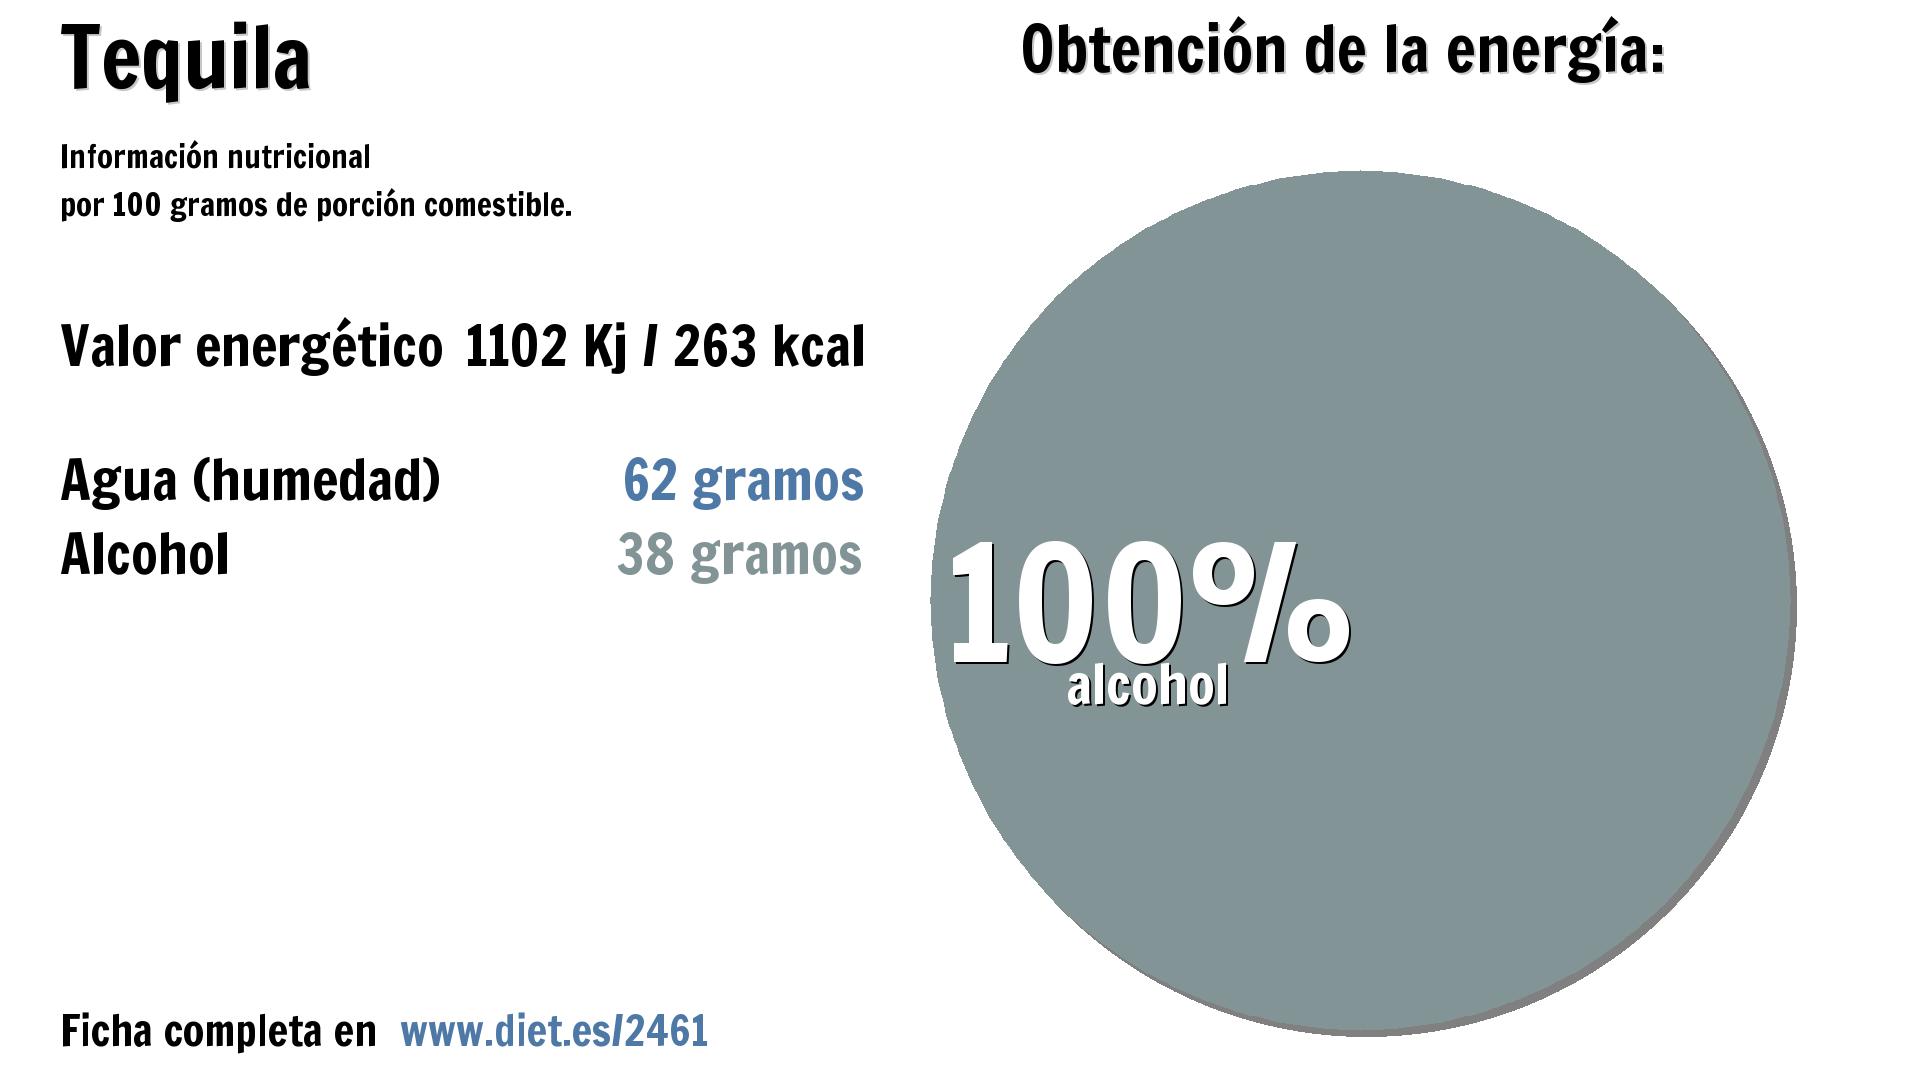 Tequila: energía 1102 Kj, agua 62 g. y alcohol 38 g.